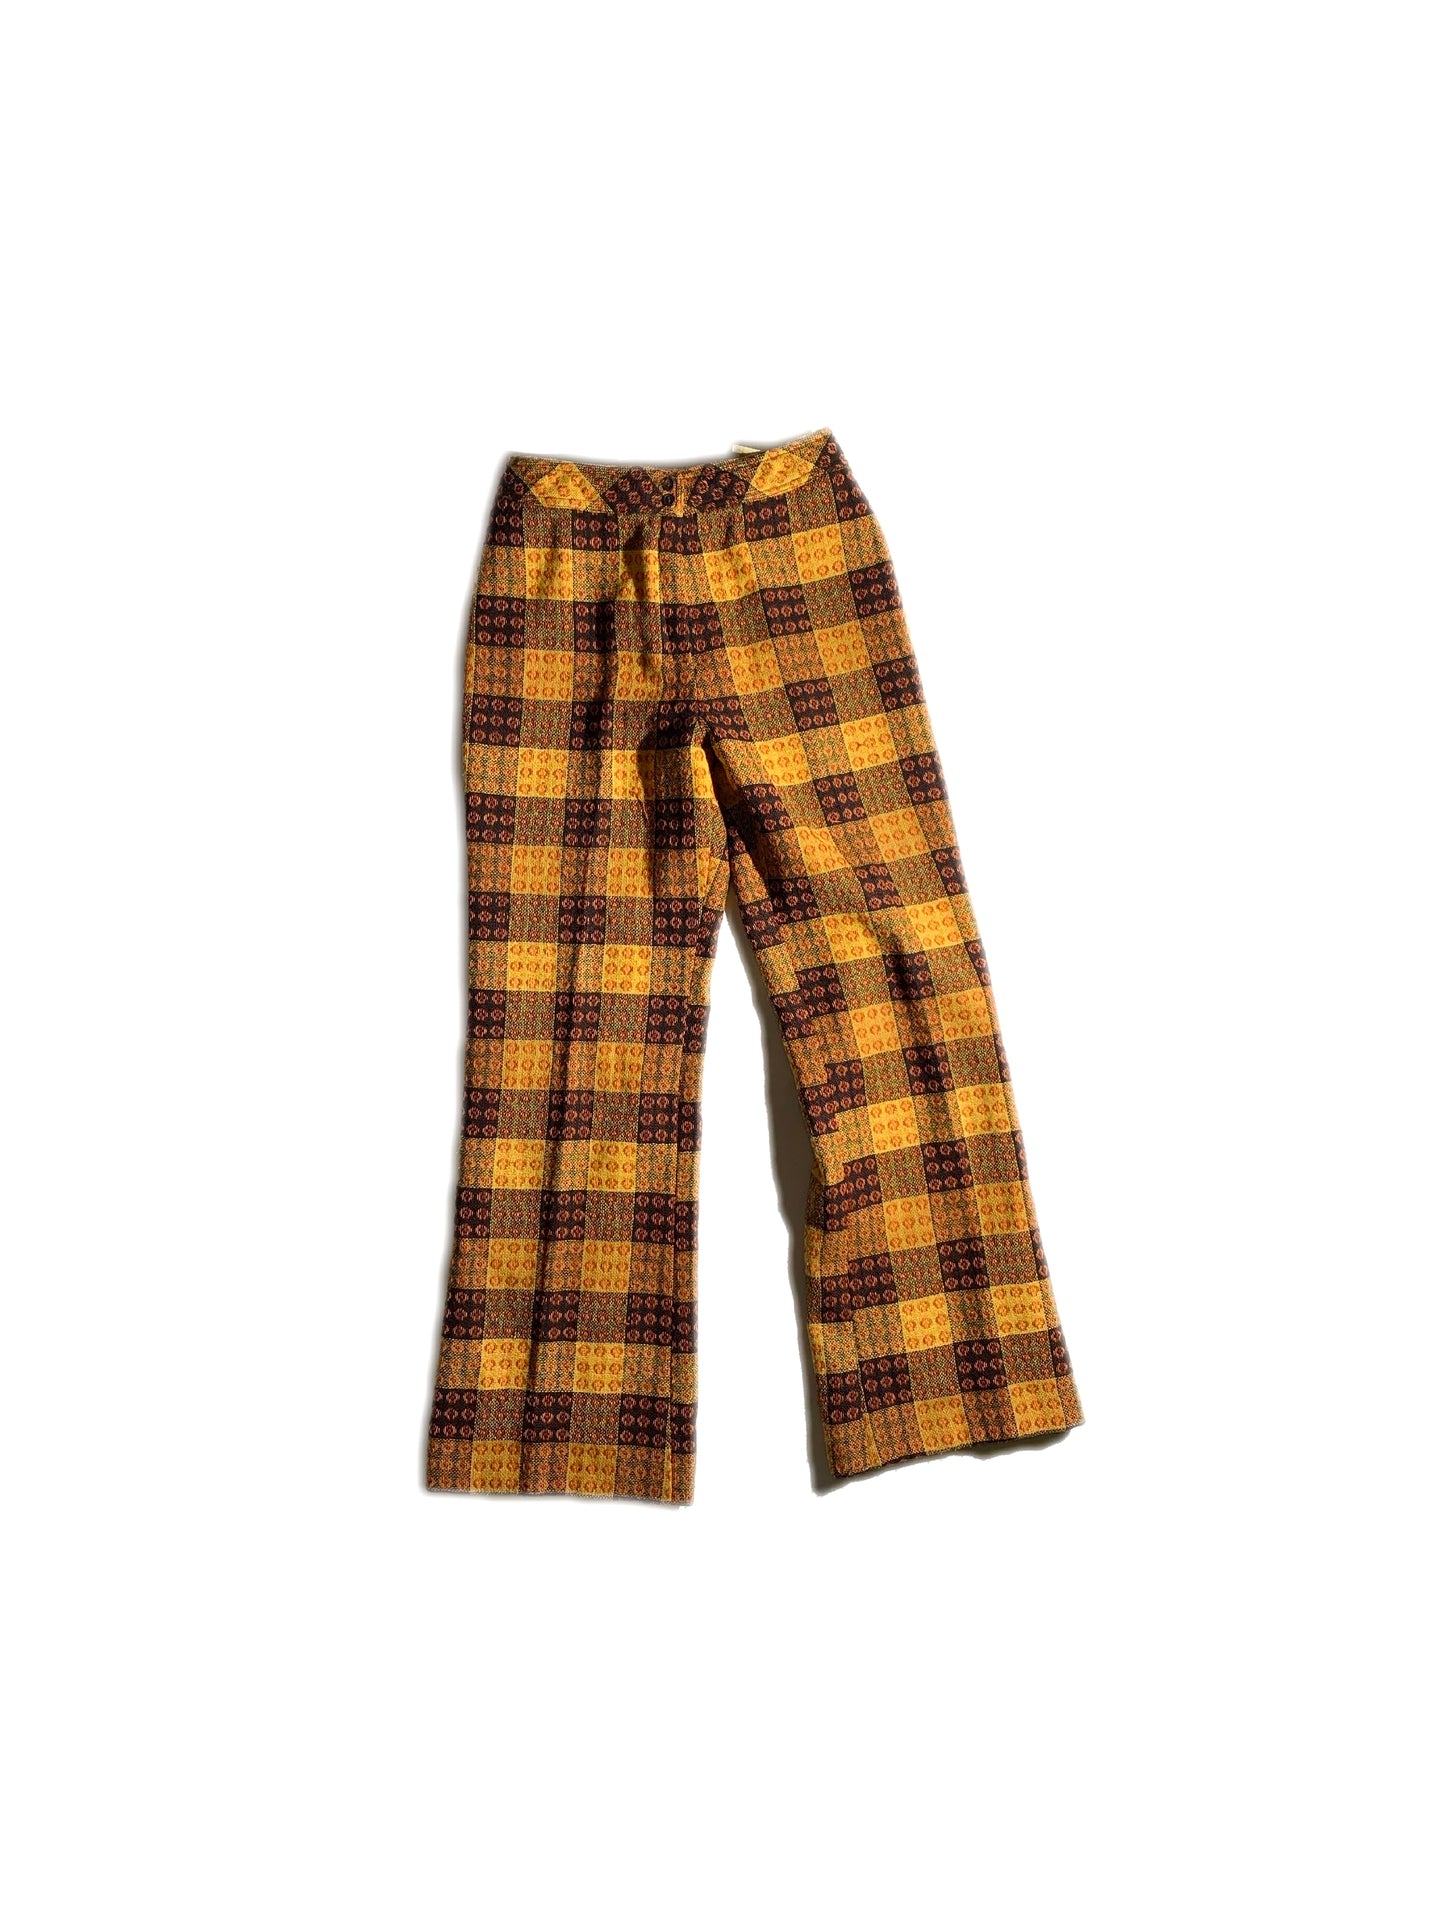 Vintage Mister Leonard Checkered Pants BELL BOTTOMS